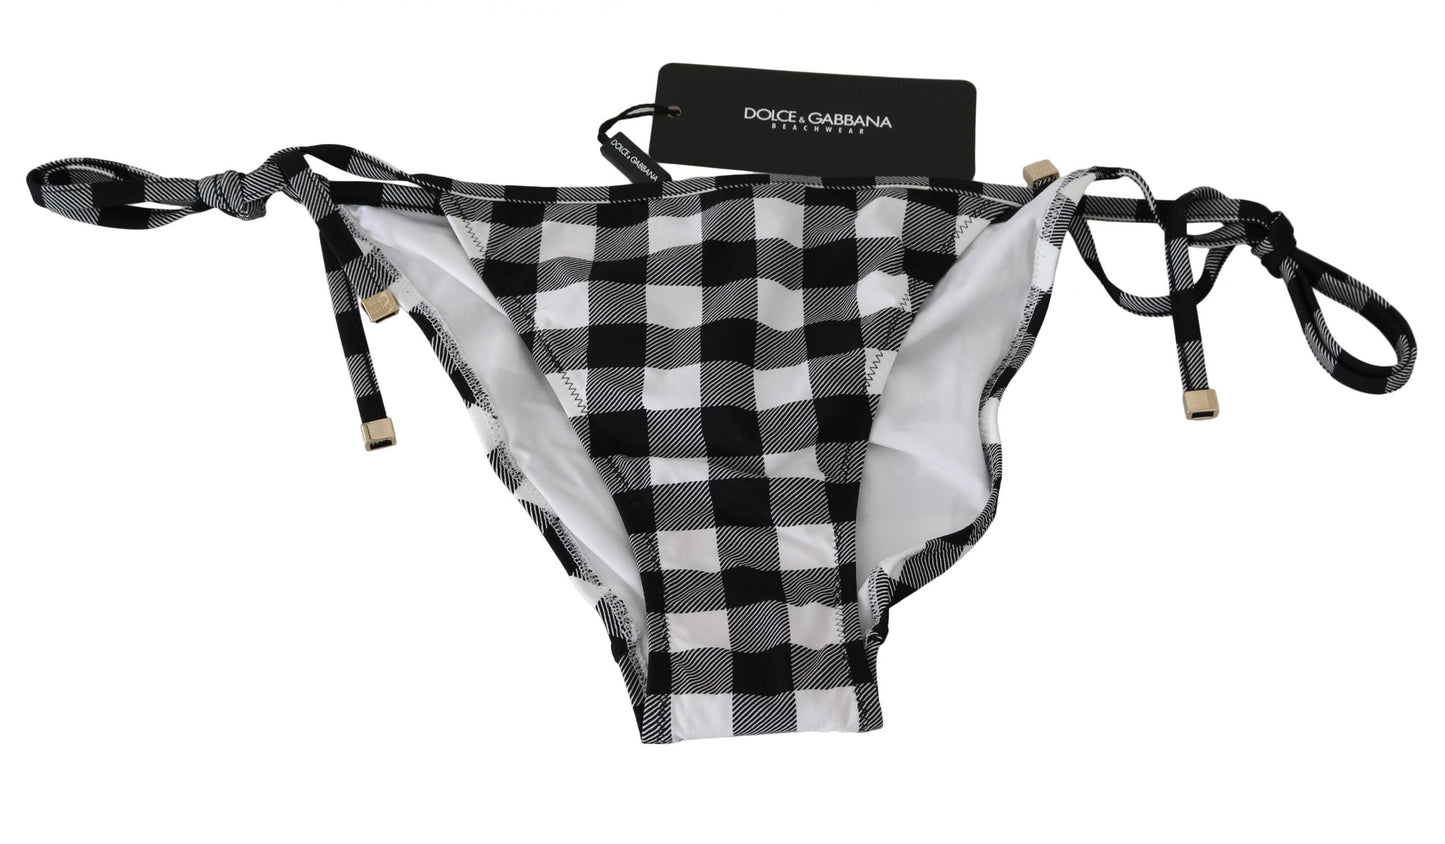 Dolce & Gabbana Checkered Monochrome Bikini Bottoms